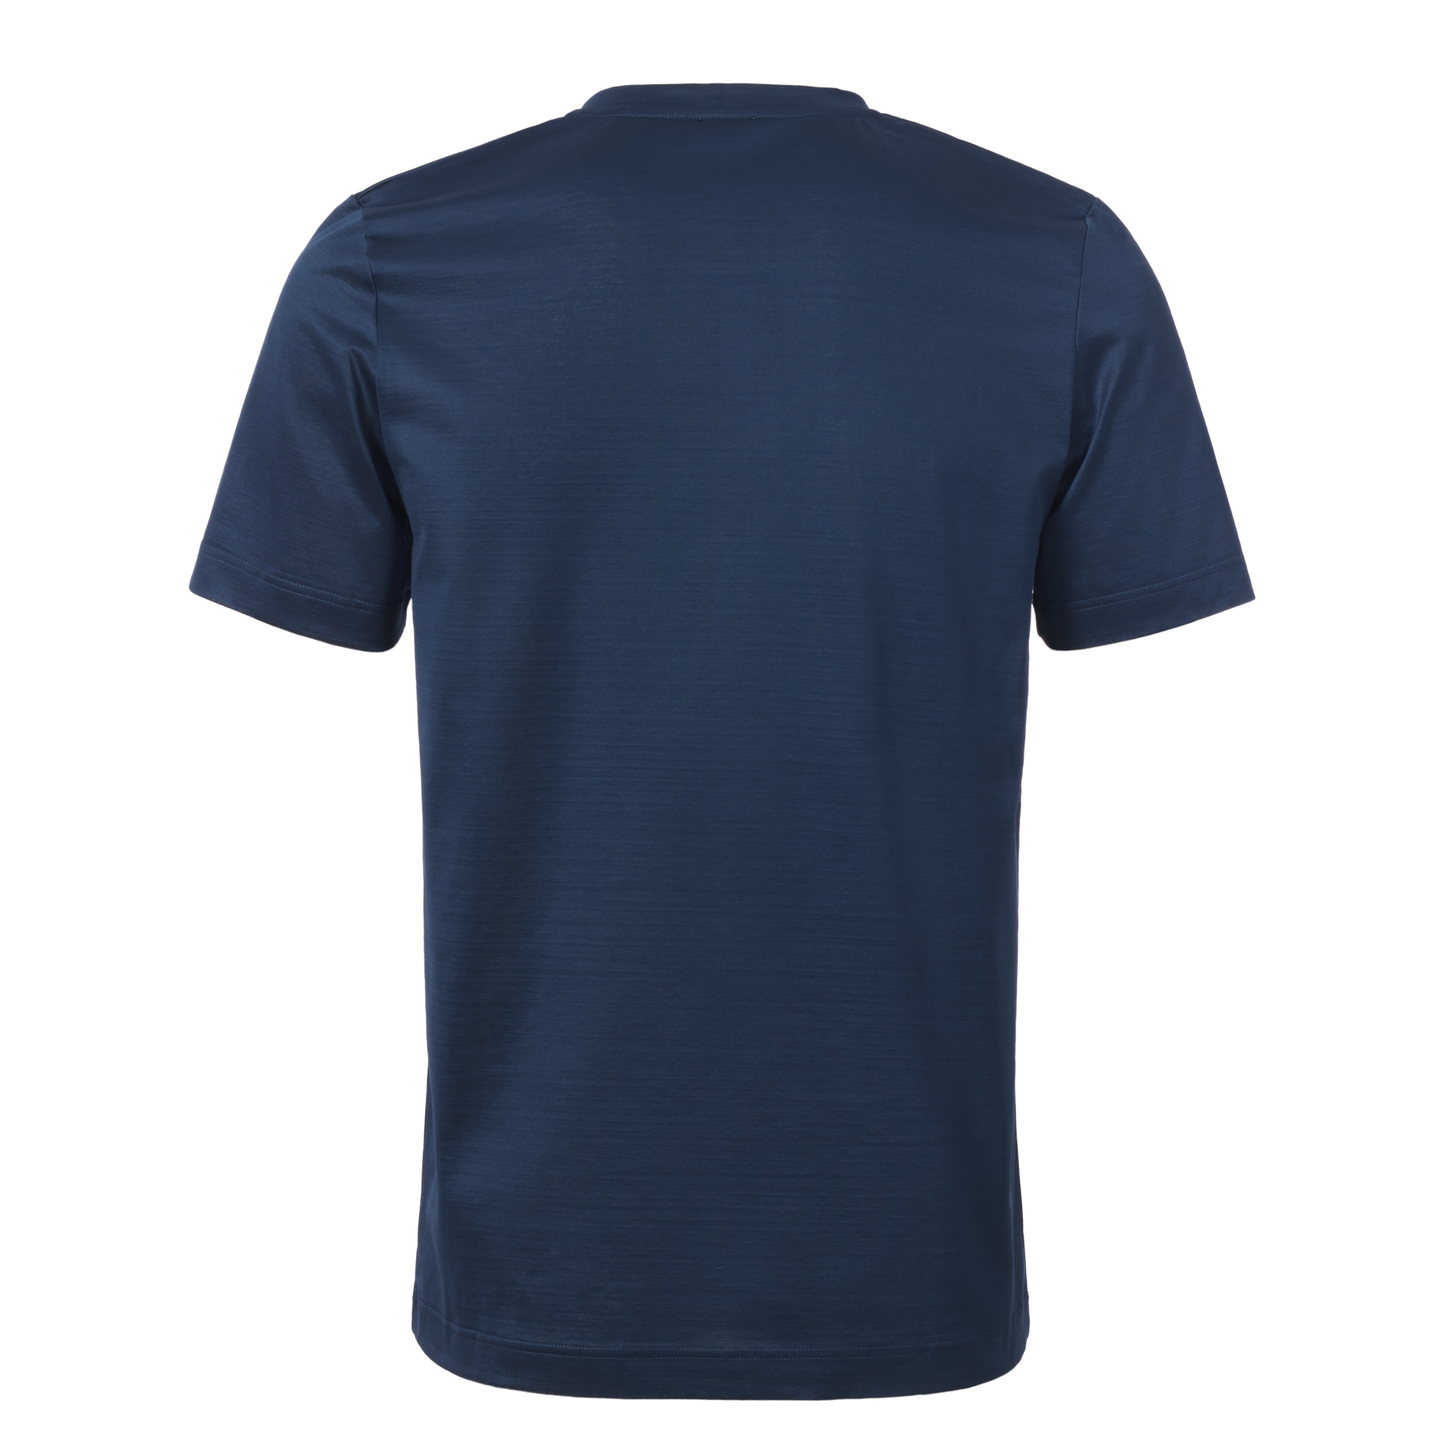 Crew-Neck Cotton T-Shirt in Blue